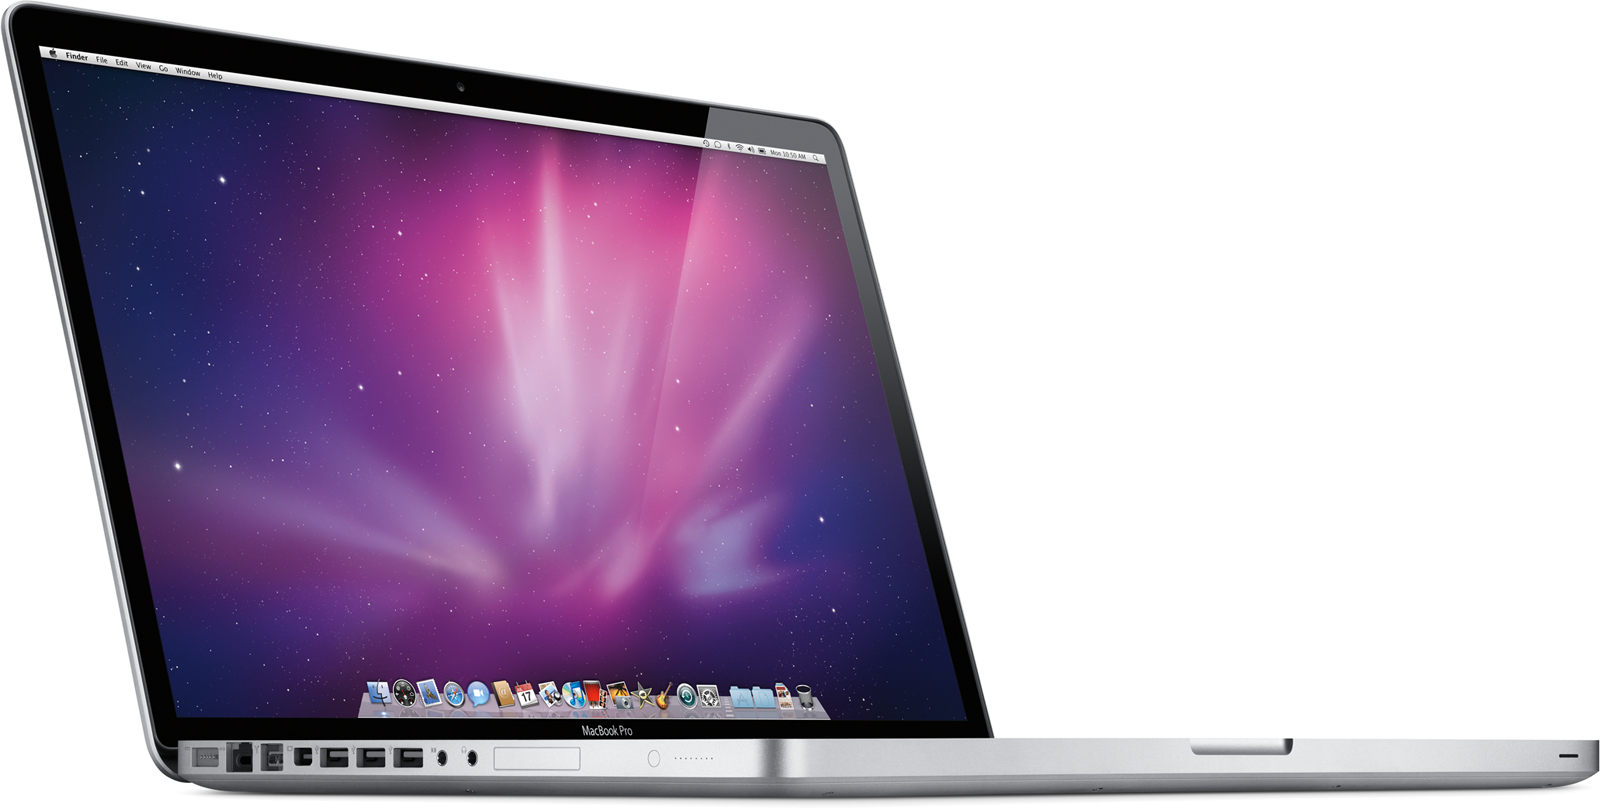 17-inch MacBook Pro, on its side